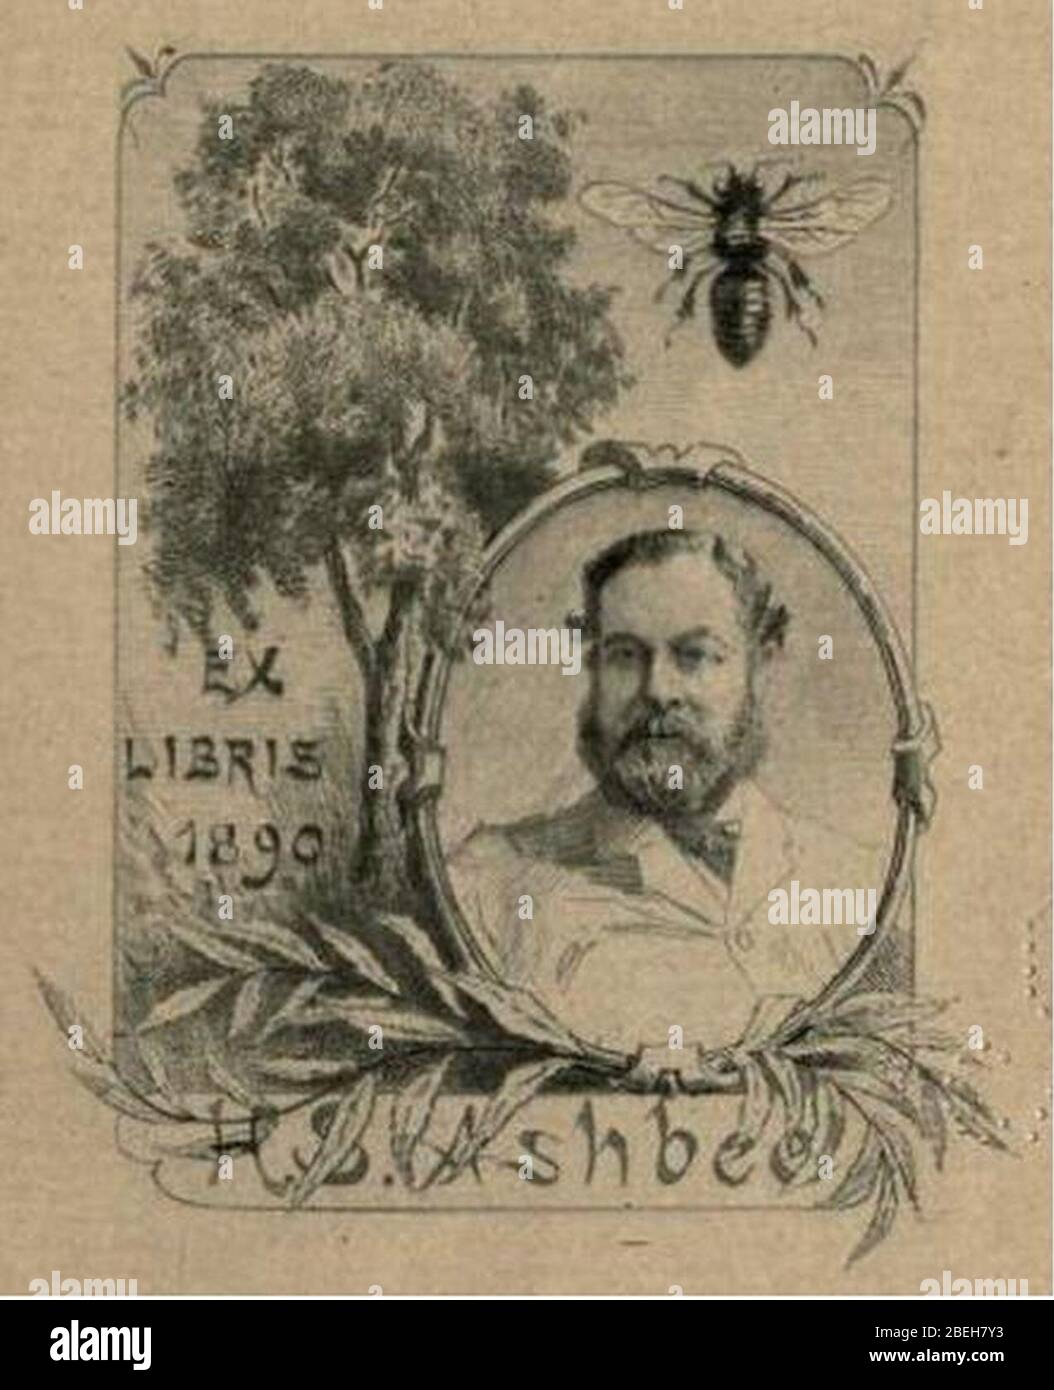 Henry Spencer Ashbee Ex Libris. Stockfoto